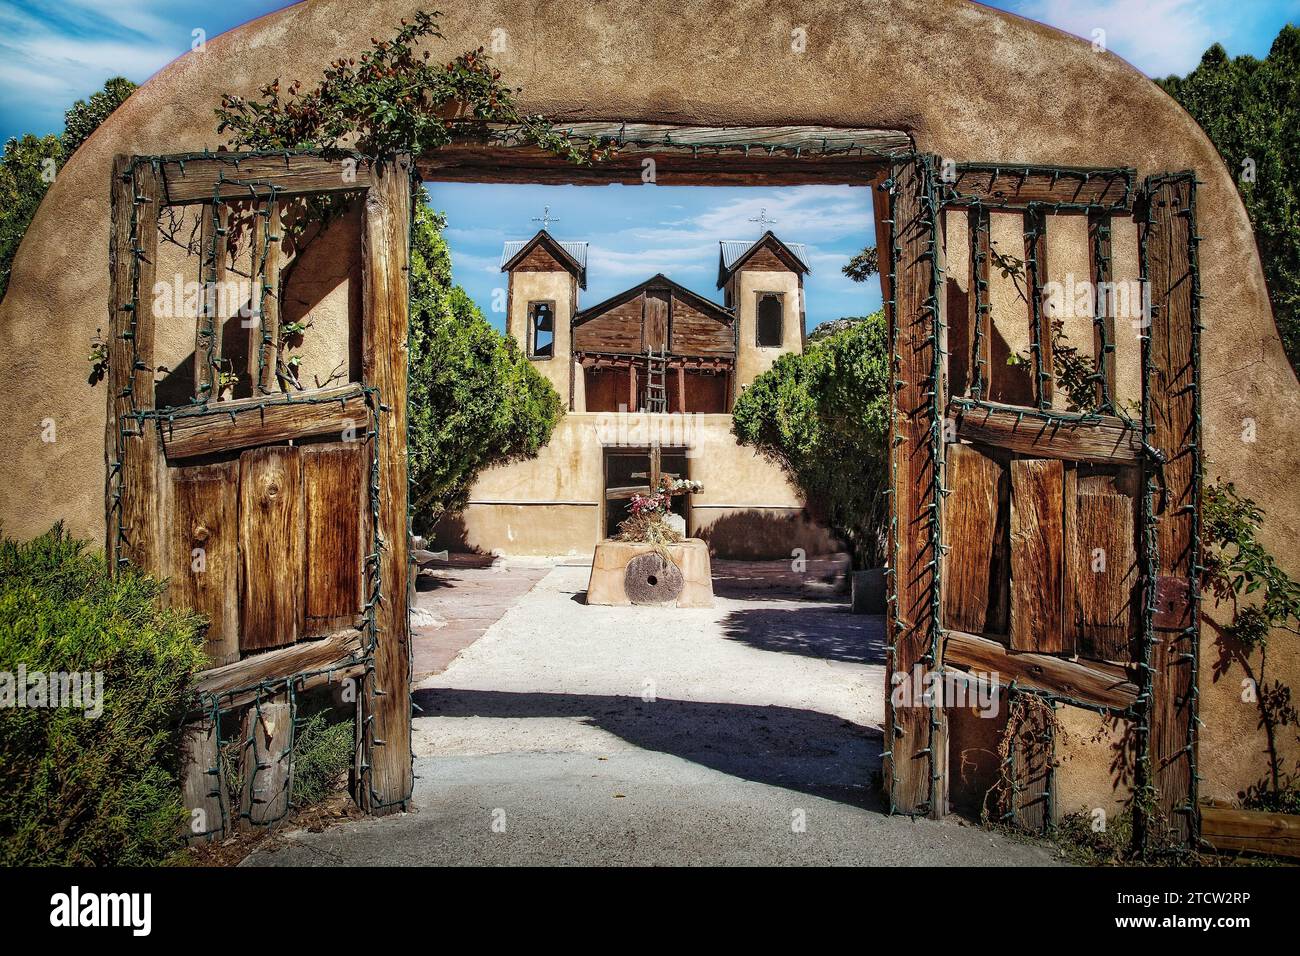 Das bescheidene Tor zum historischen Sactuario de Chimayo in New Mexico. Stockfoto